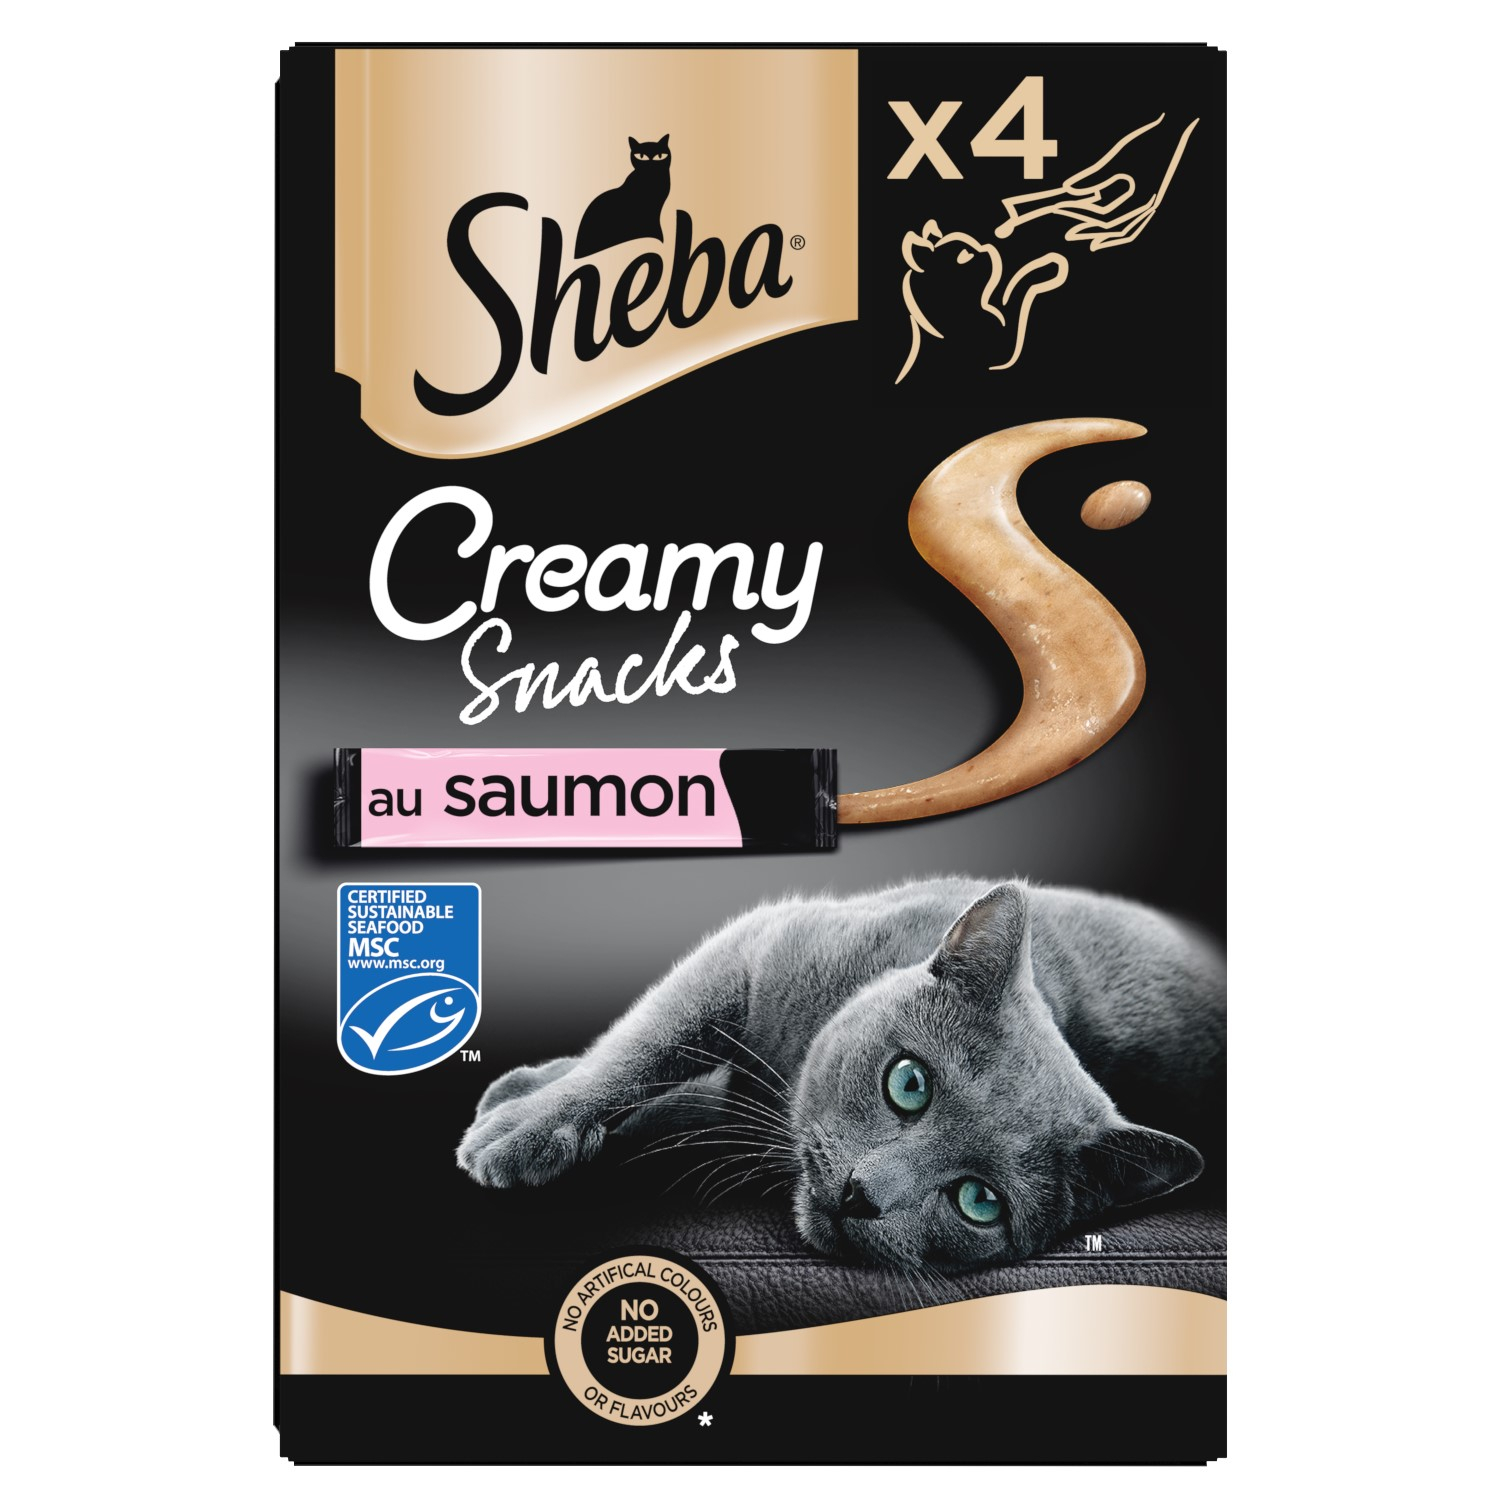 SHEBA Creamy Snacks para gato - Vários sabores disponíveis